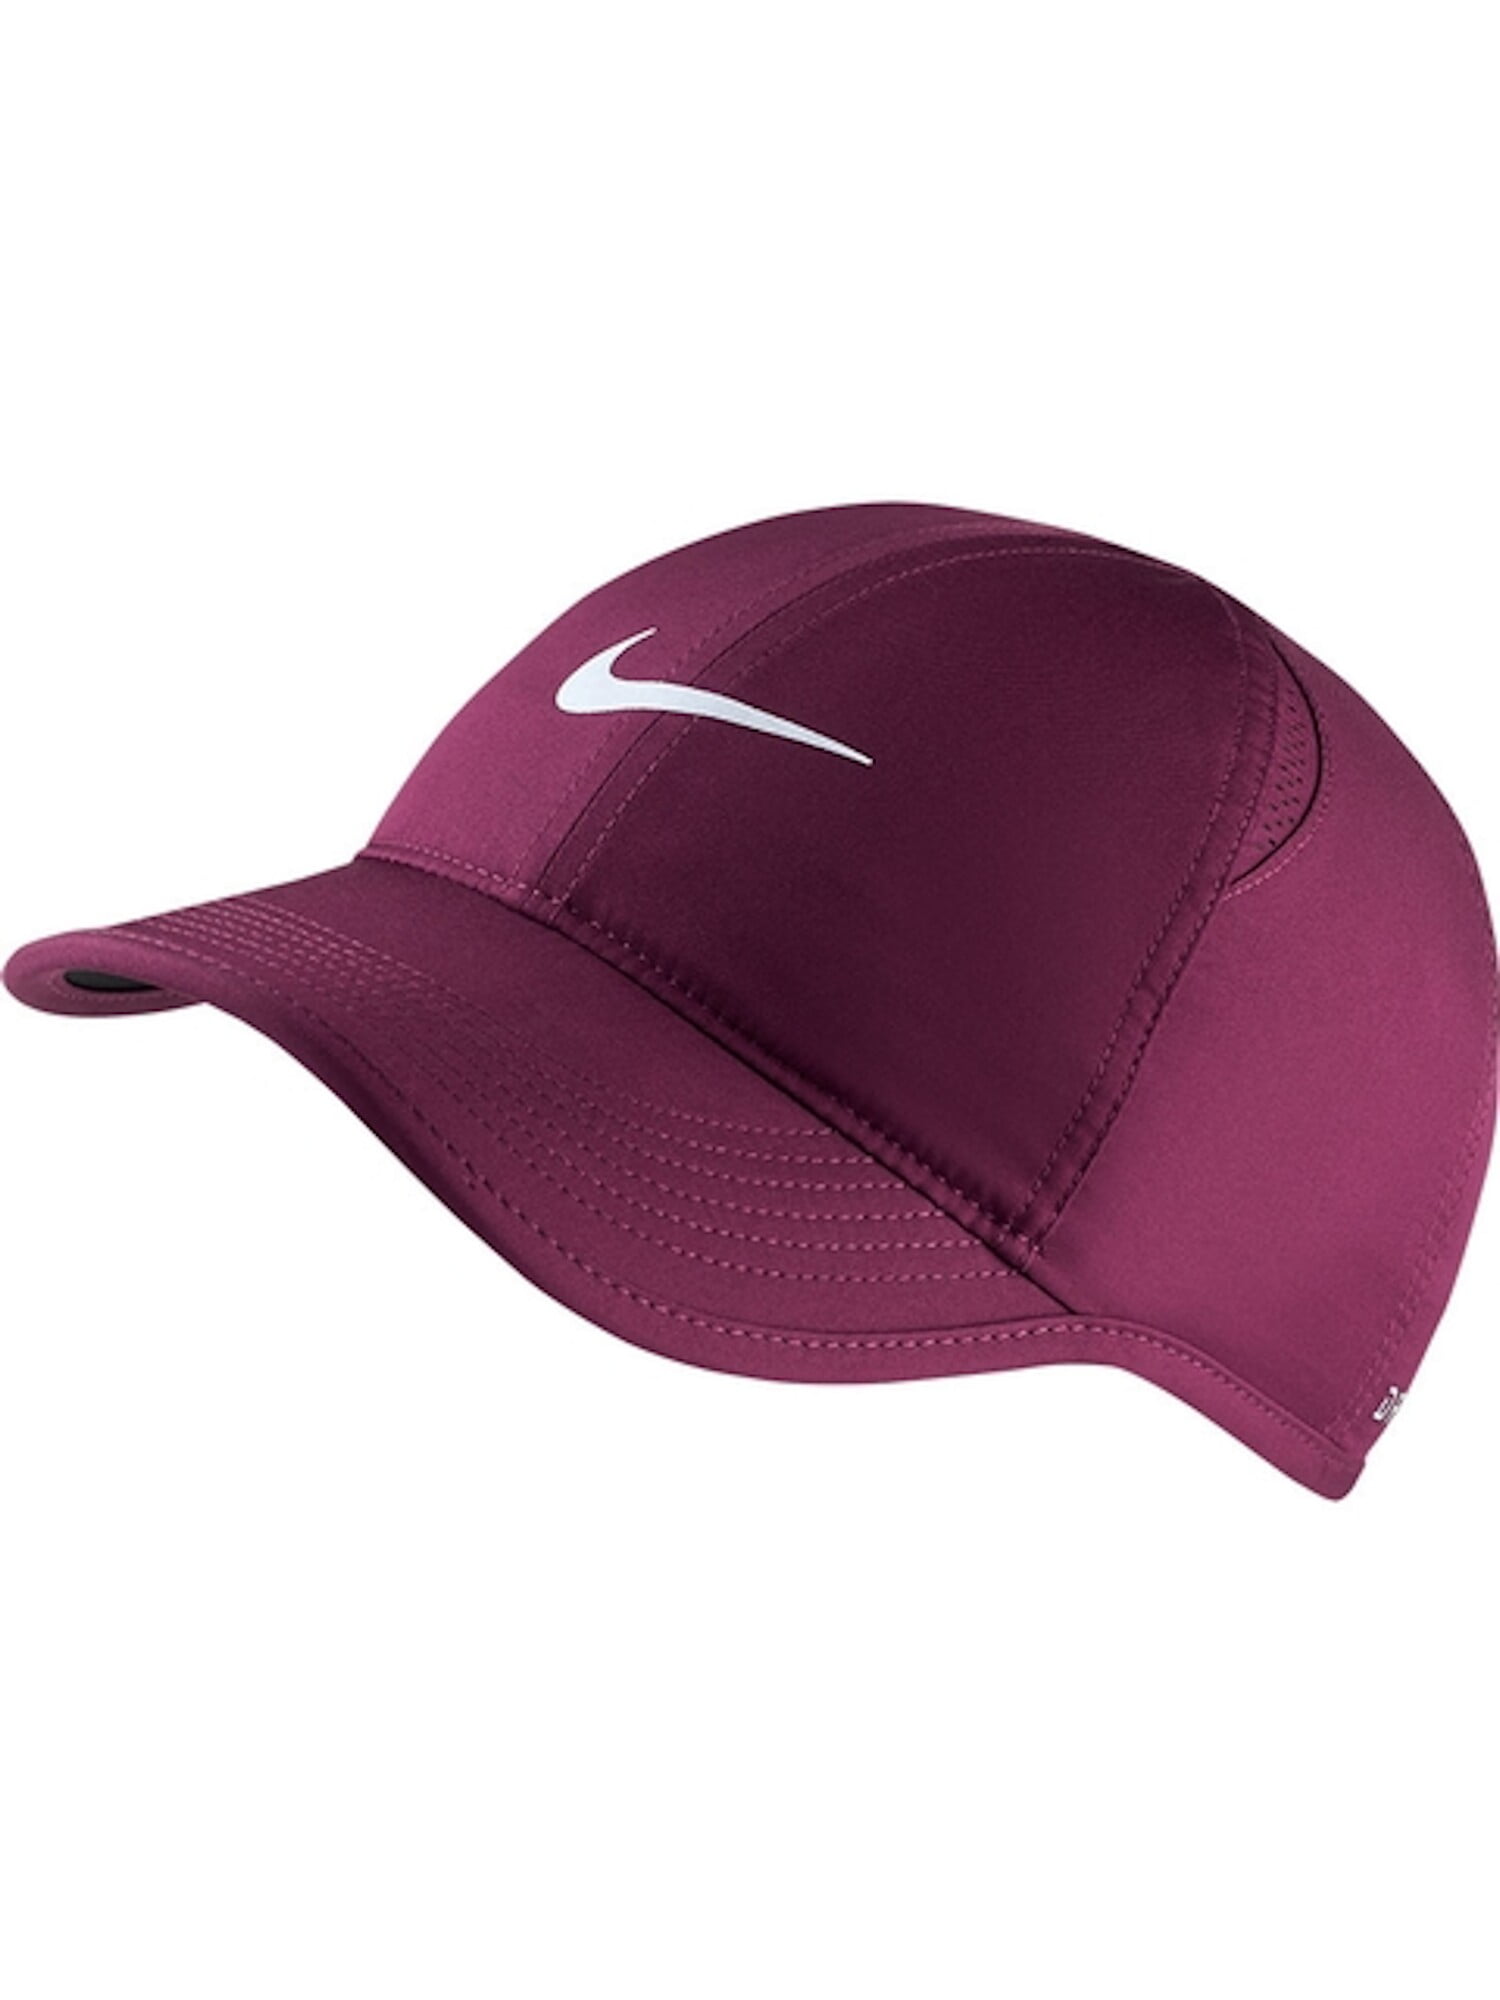 NIKE Youth Featherlight DRI-FIT Tennis/Running/Golf Cap/Hat-Deep Pink/Black  209449-616 – VALLEYSPORTING